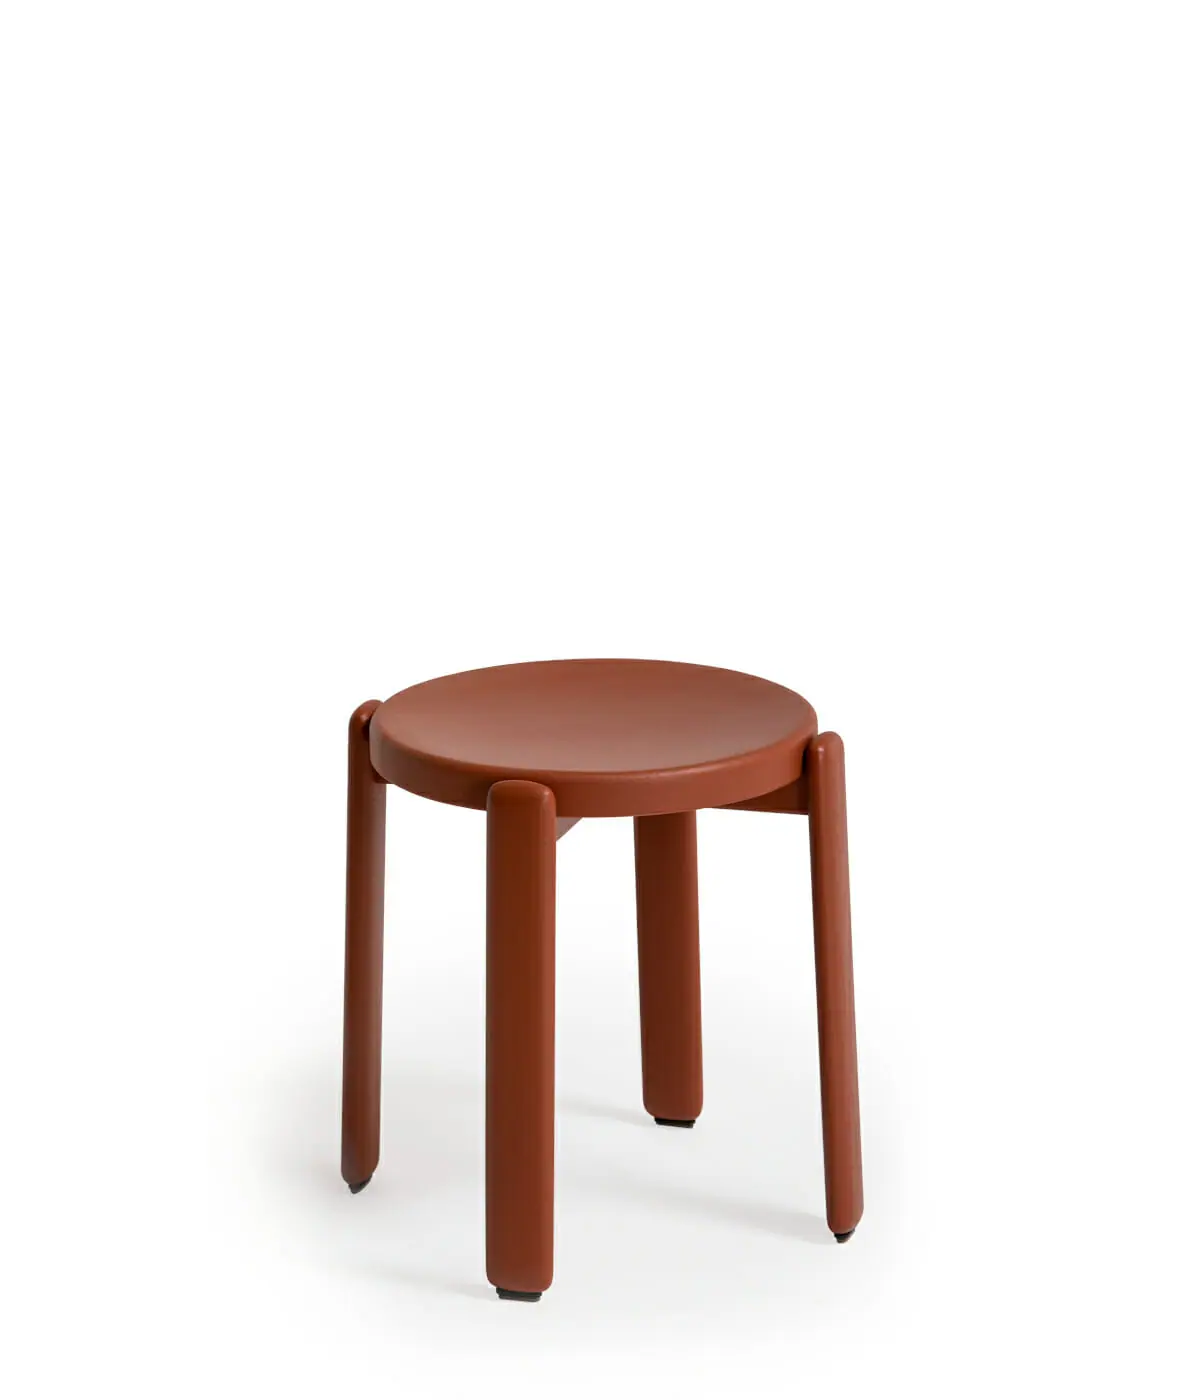 83910-83904-tura-chair-stools